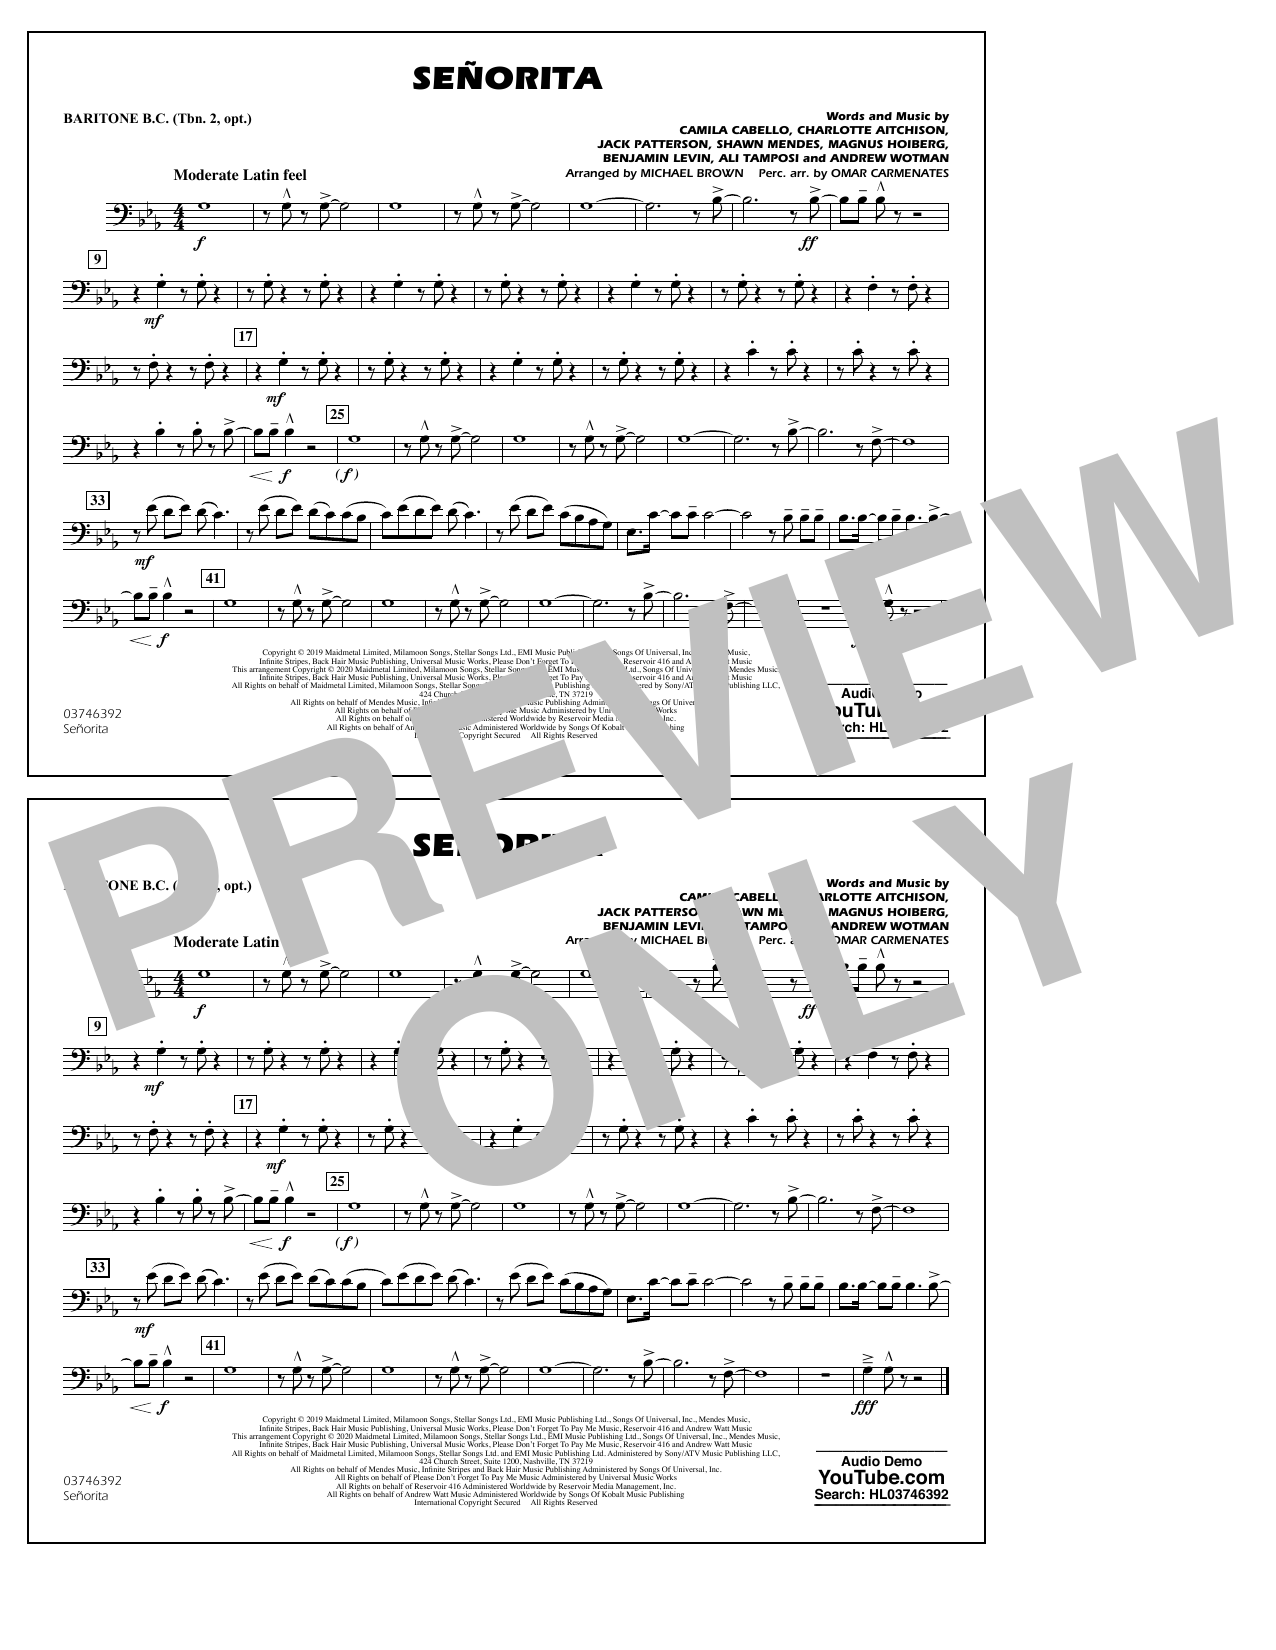 Shawn Mendes & Camila Cabello Señorita (arr. Carmenates and Brown) - Baritone B.C. Sheet Music Notes & Chords for Marching Band - Download or Print PDF